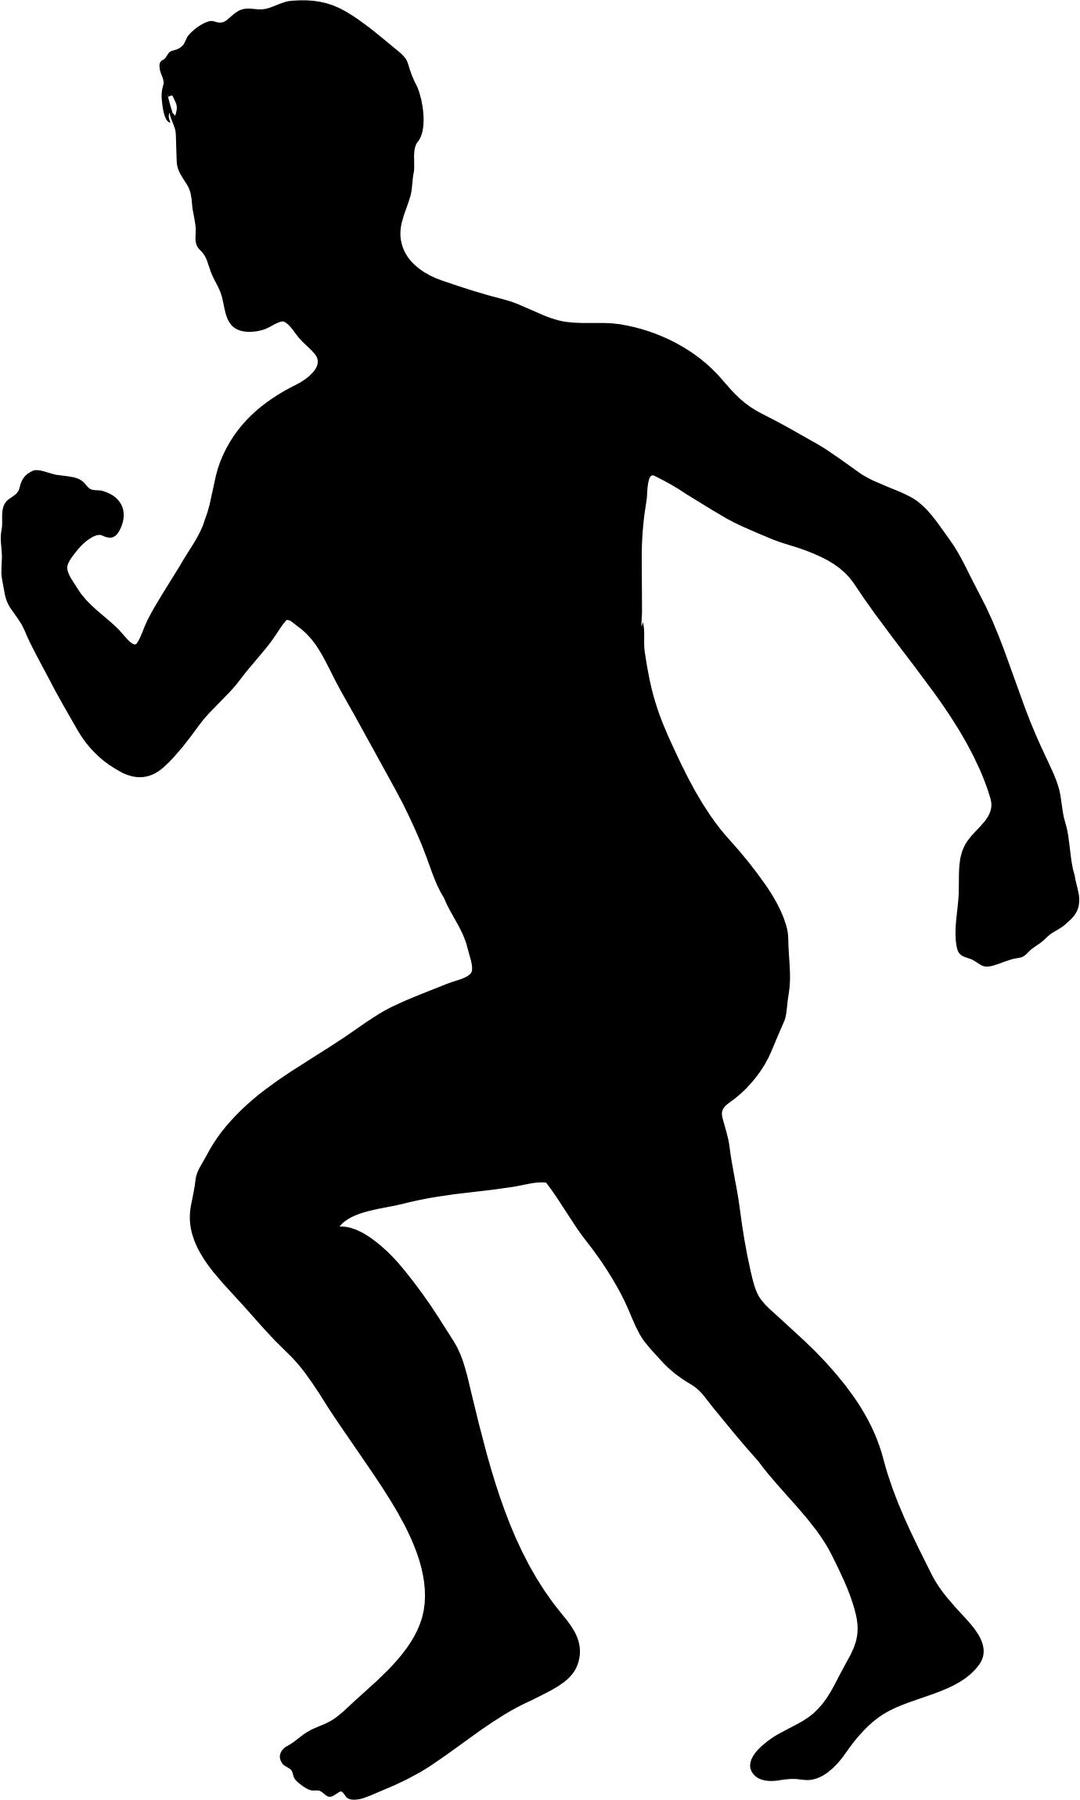 The Running Man png transparent